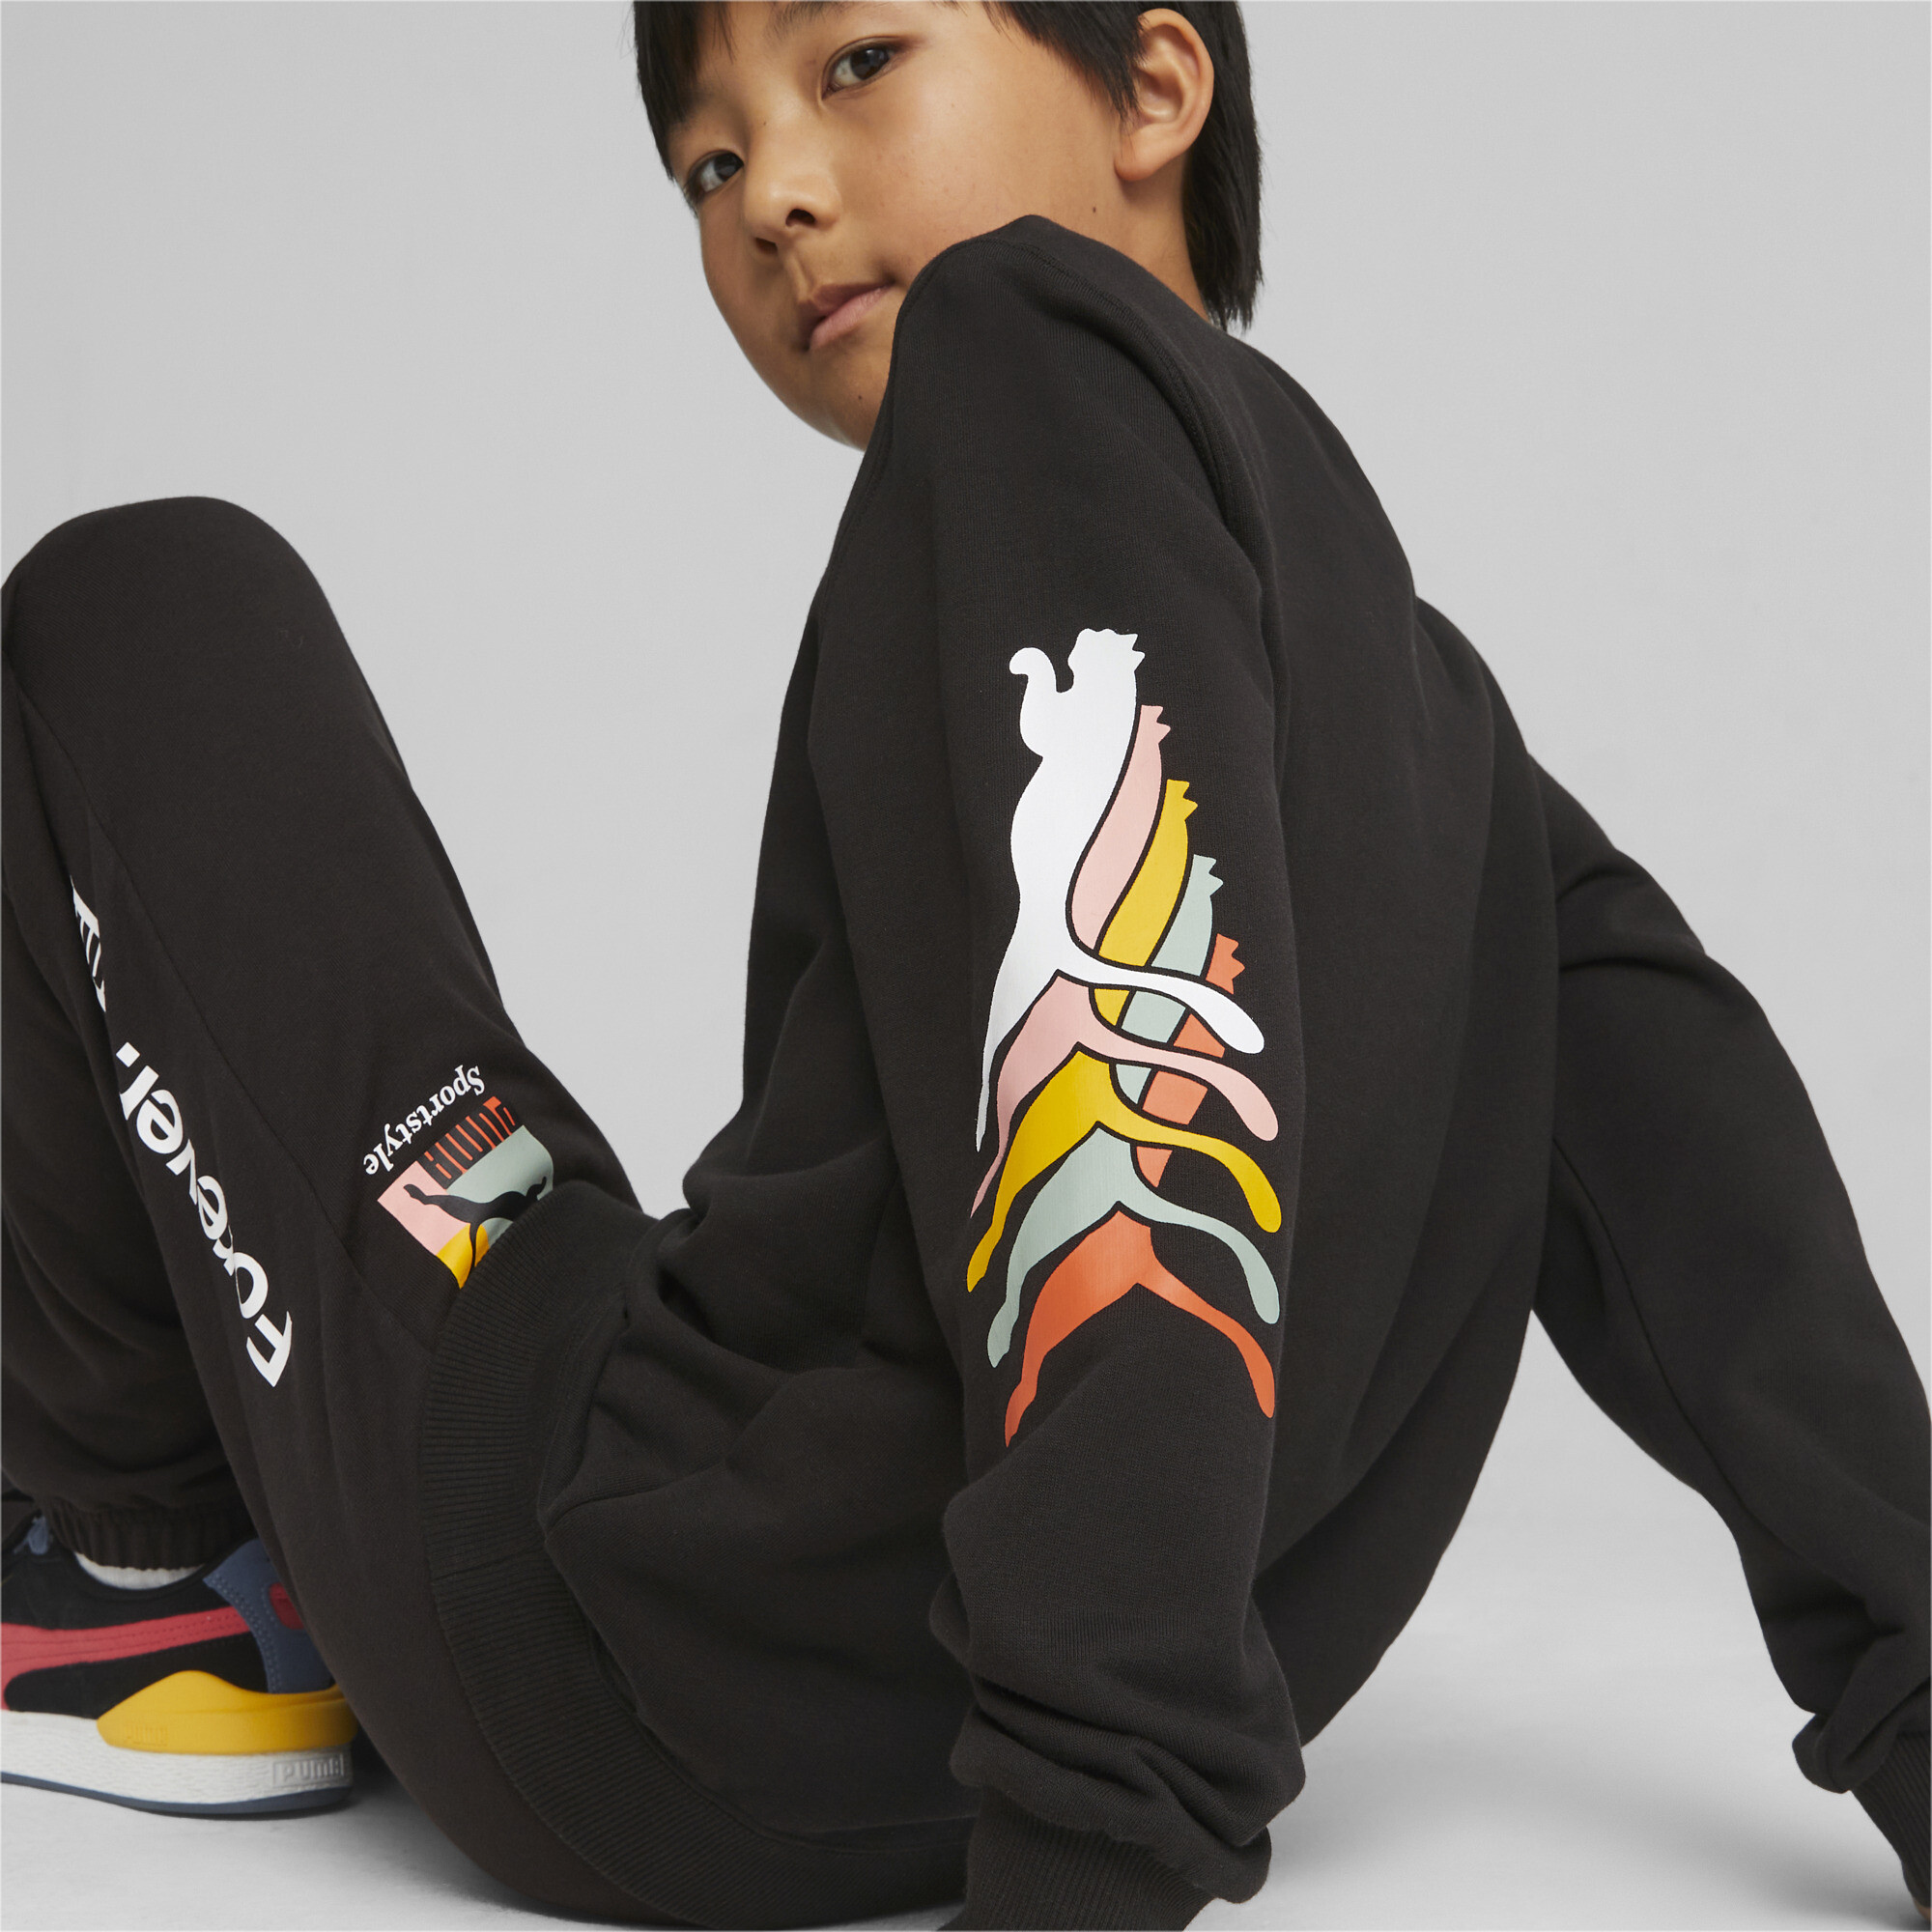 Men's Puma Classics Brand Love Youth Sweatshirt, Black, Size 15-16Y, Clothing